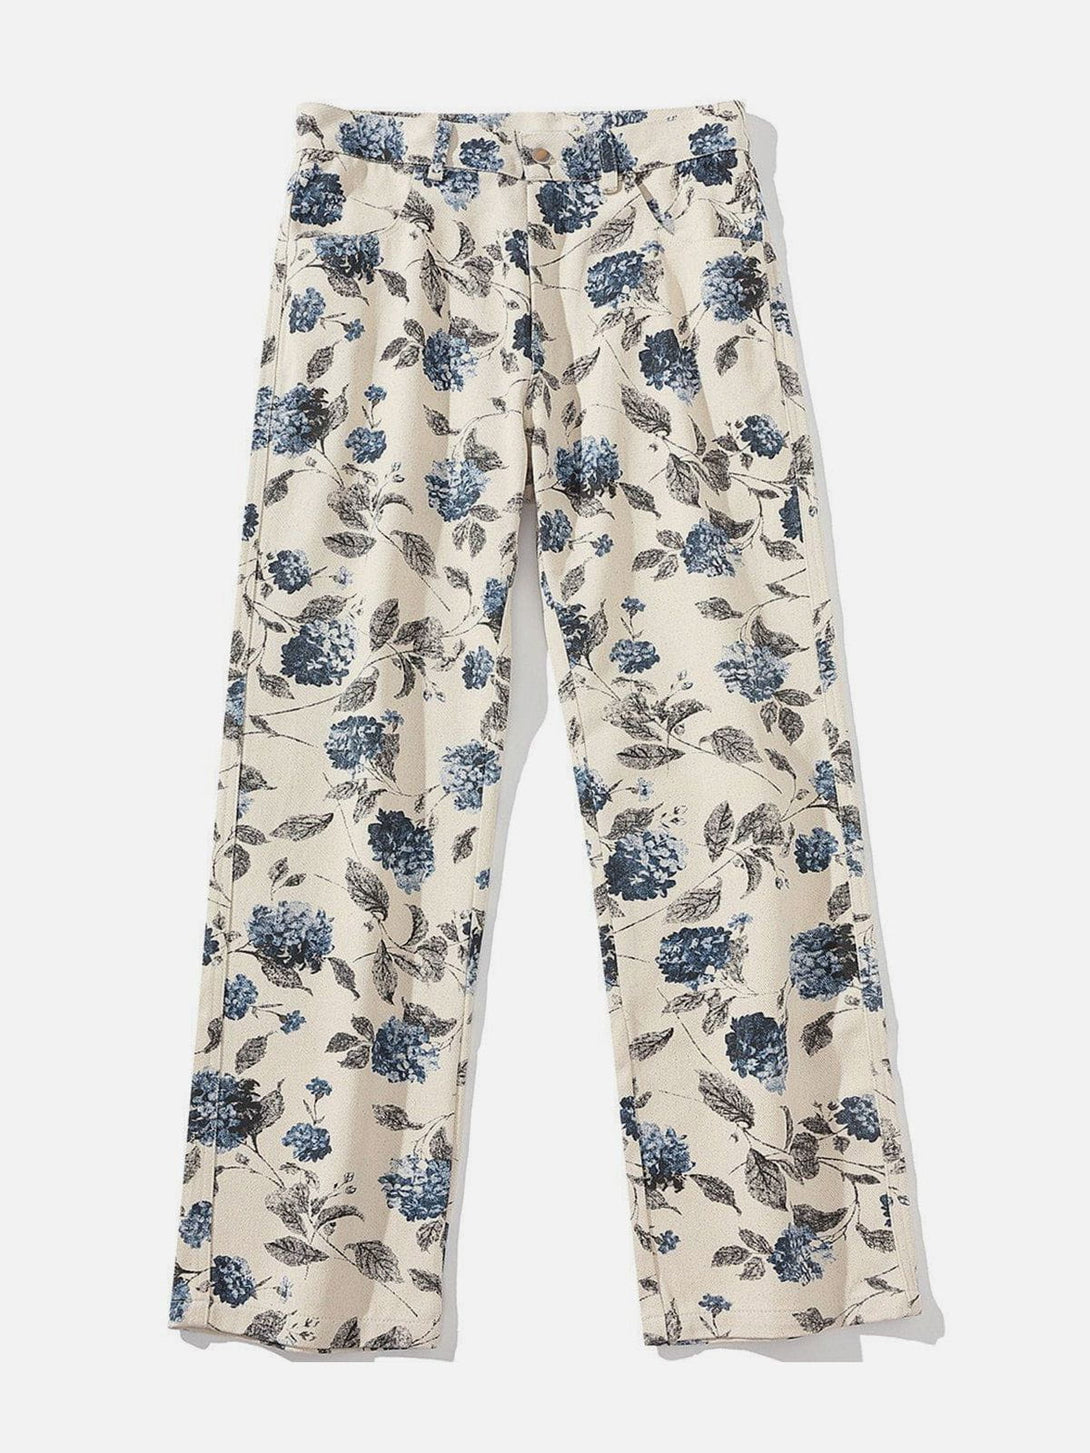 Majesda® - Full Flower Print Pants outfit ideas streetwear fashion